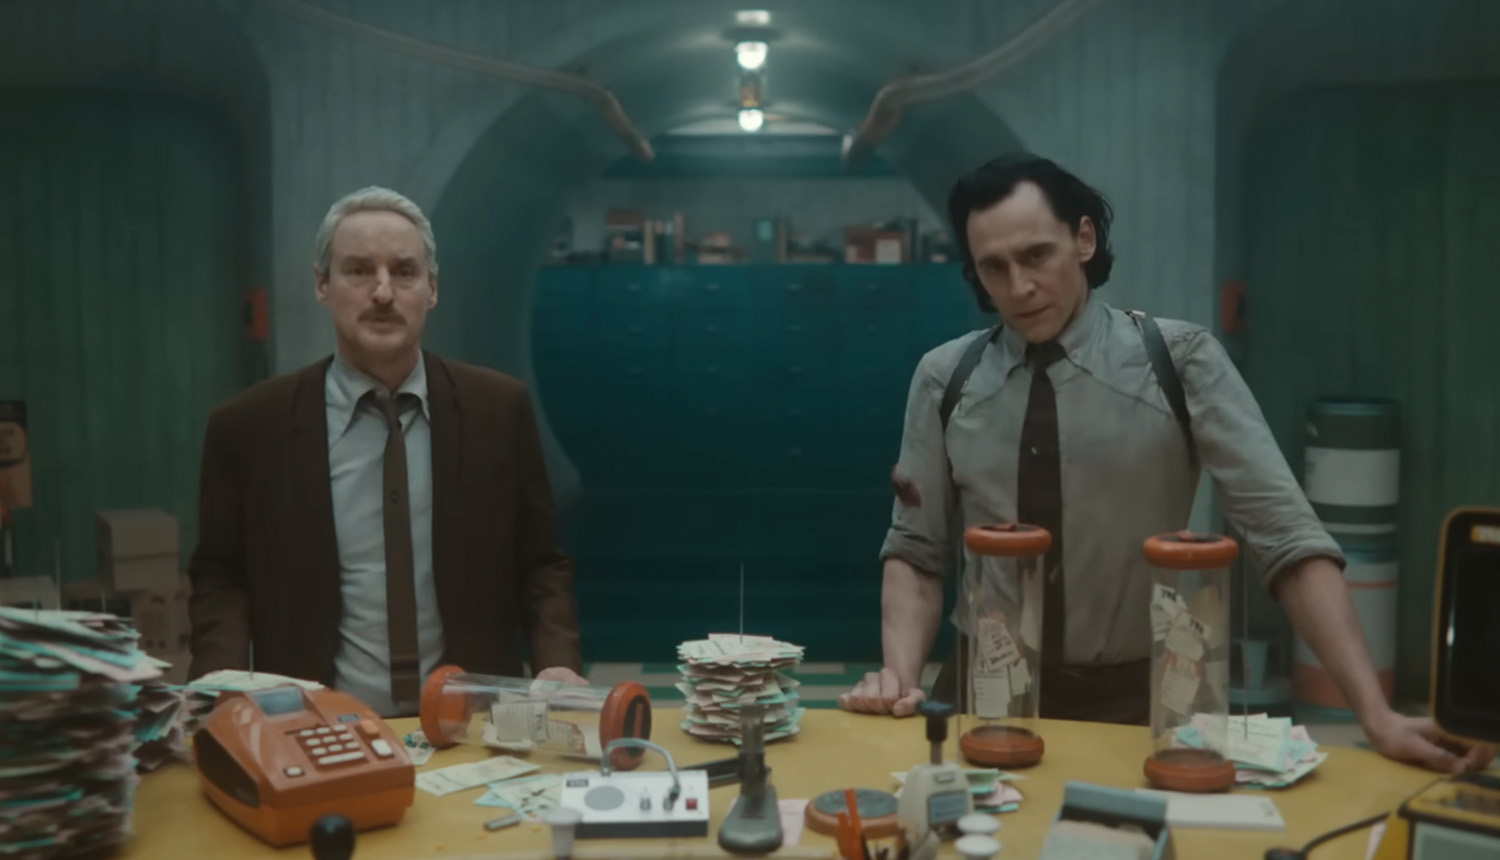 New 'Loki' Season 2 Promo Raises Concerns About Marvel's Originality in a  Post-'Endgame' World